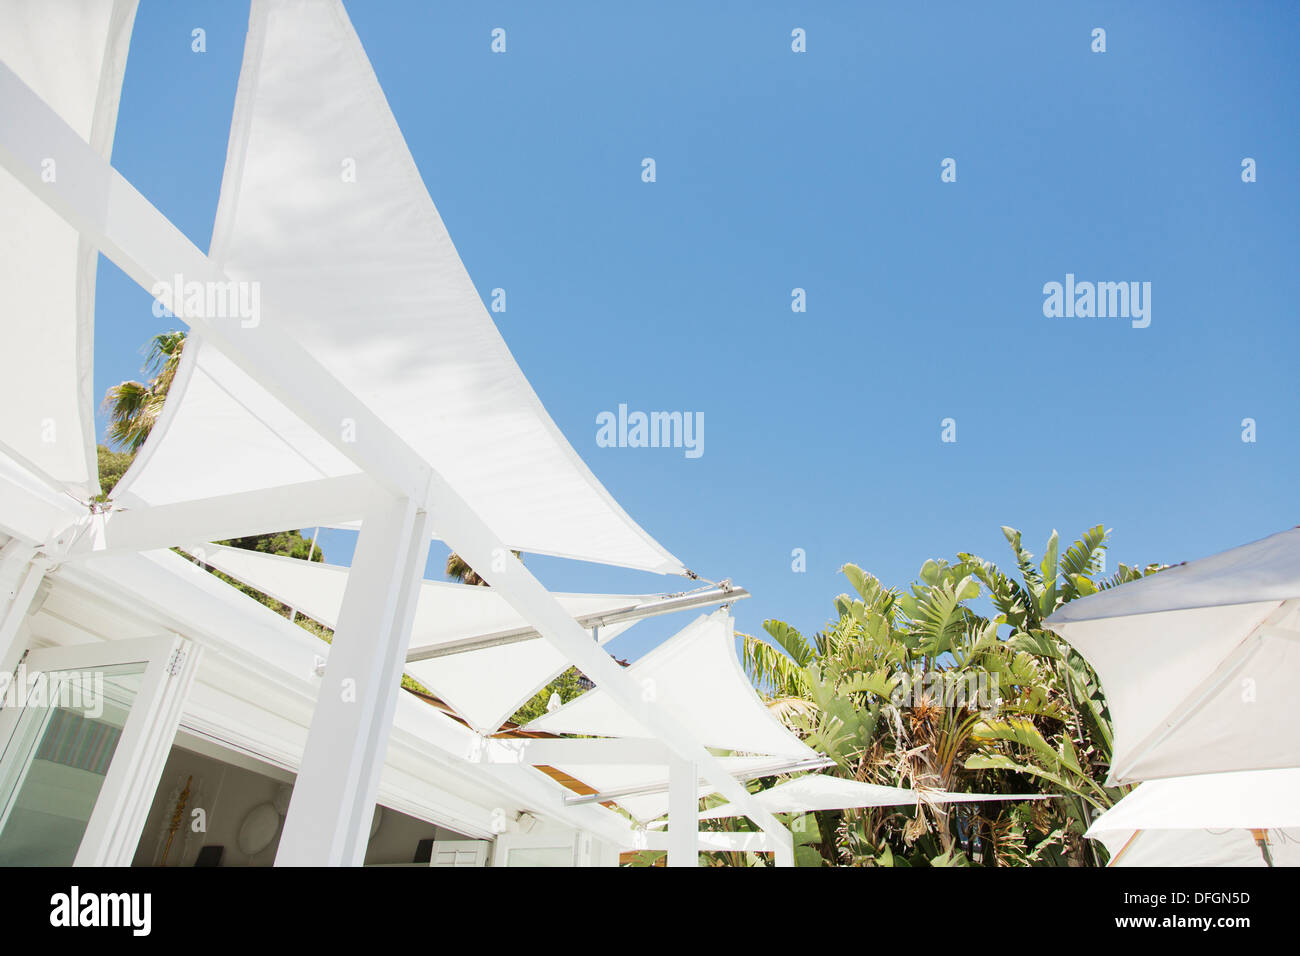 White awnings against blue sky Stock Photo